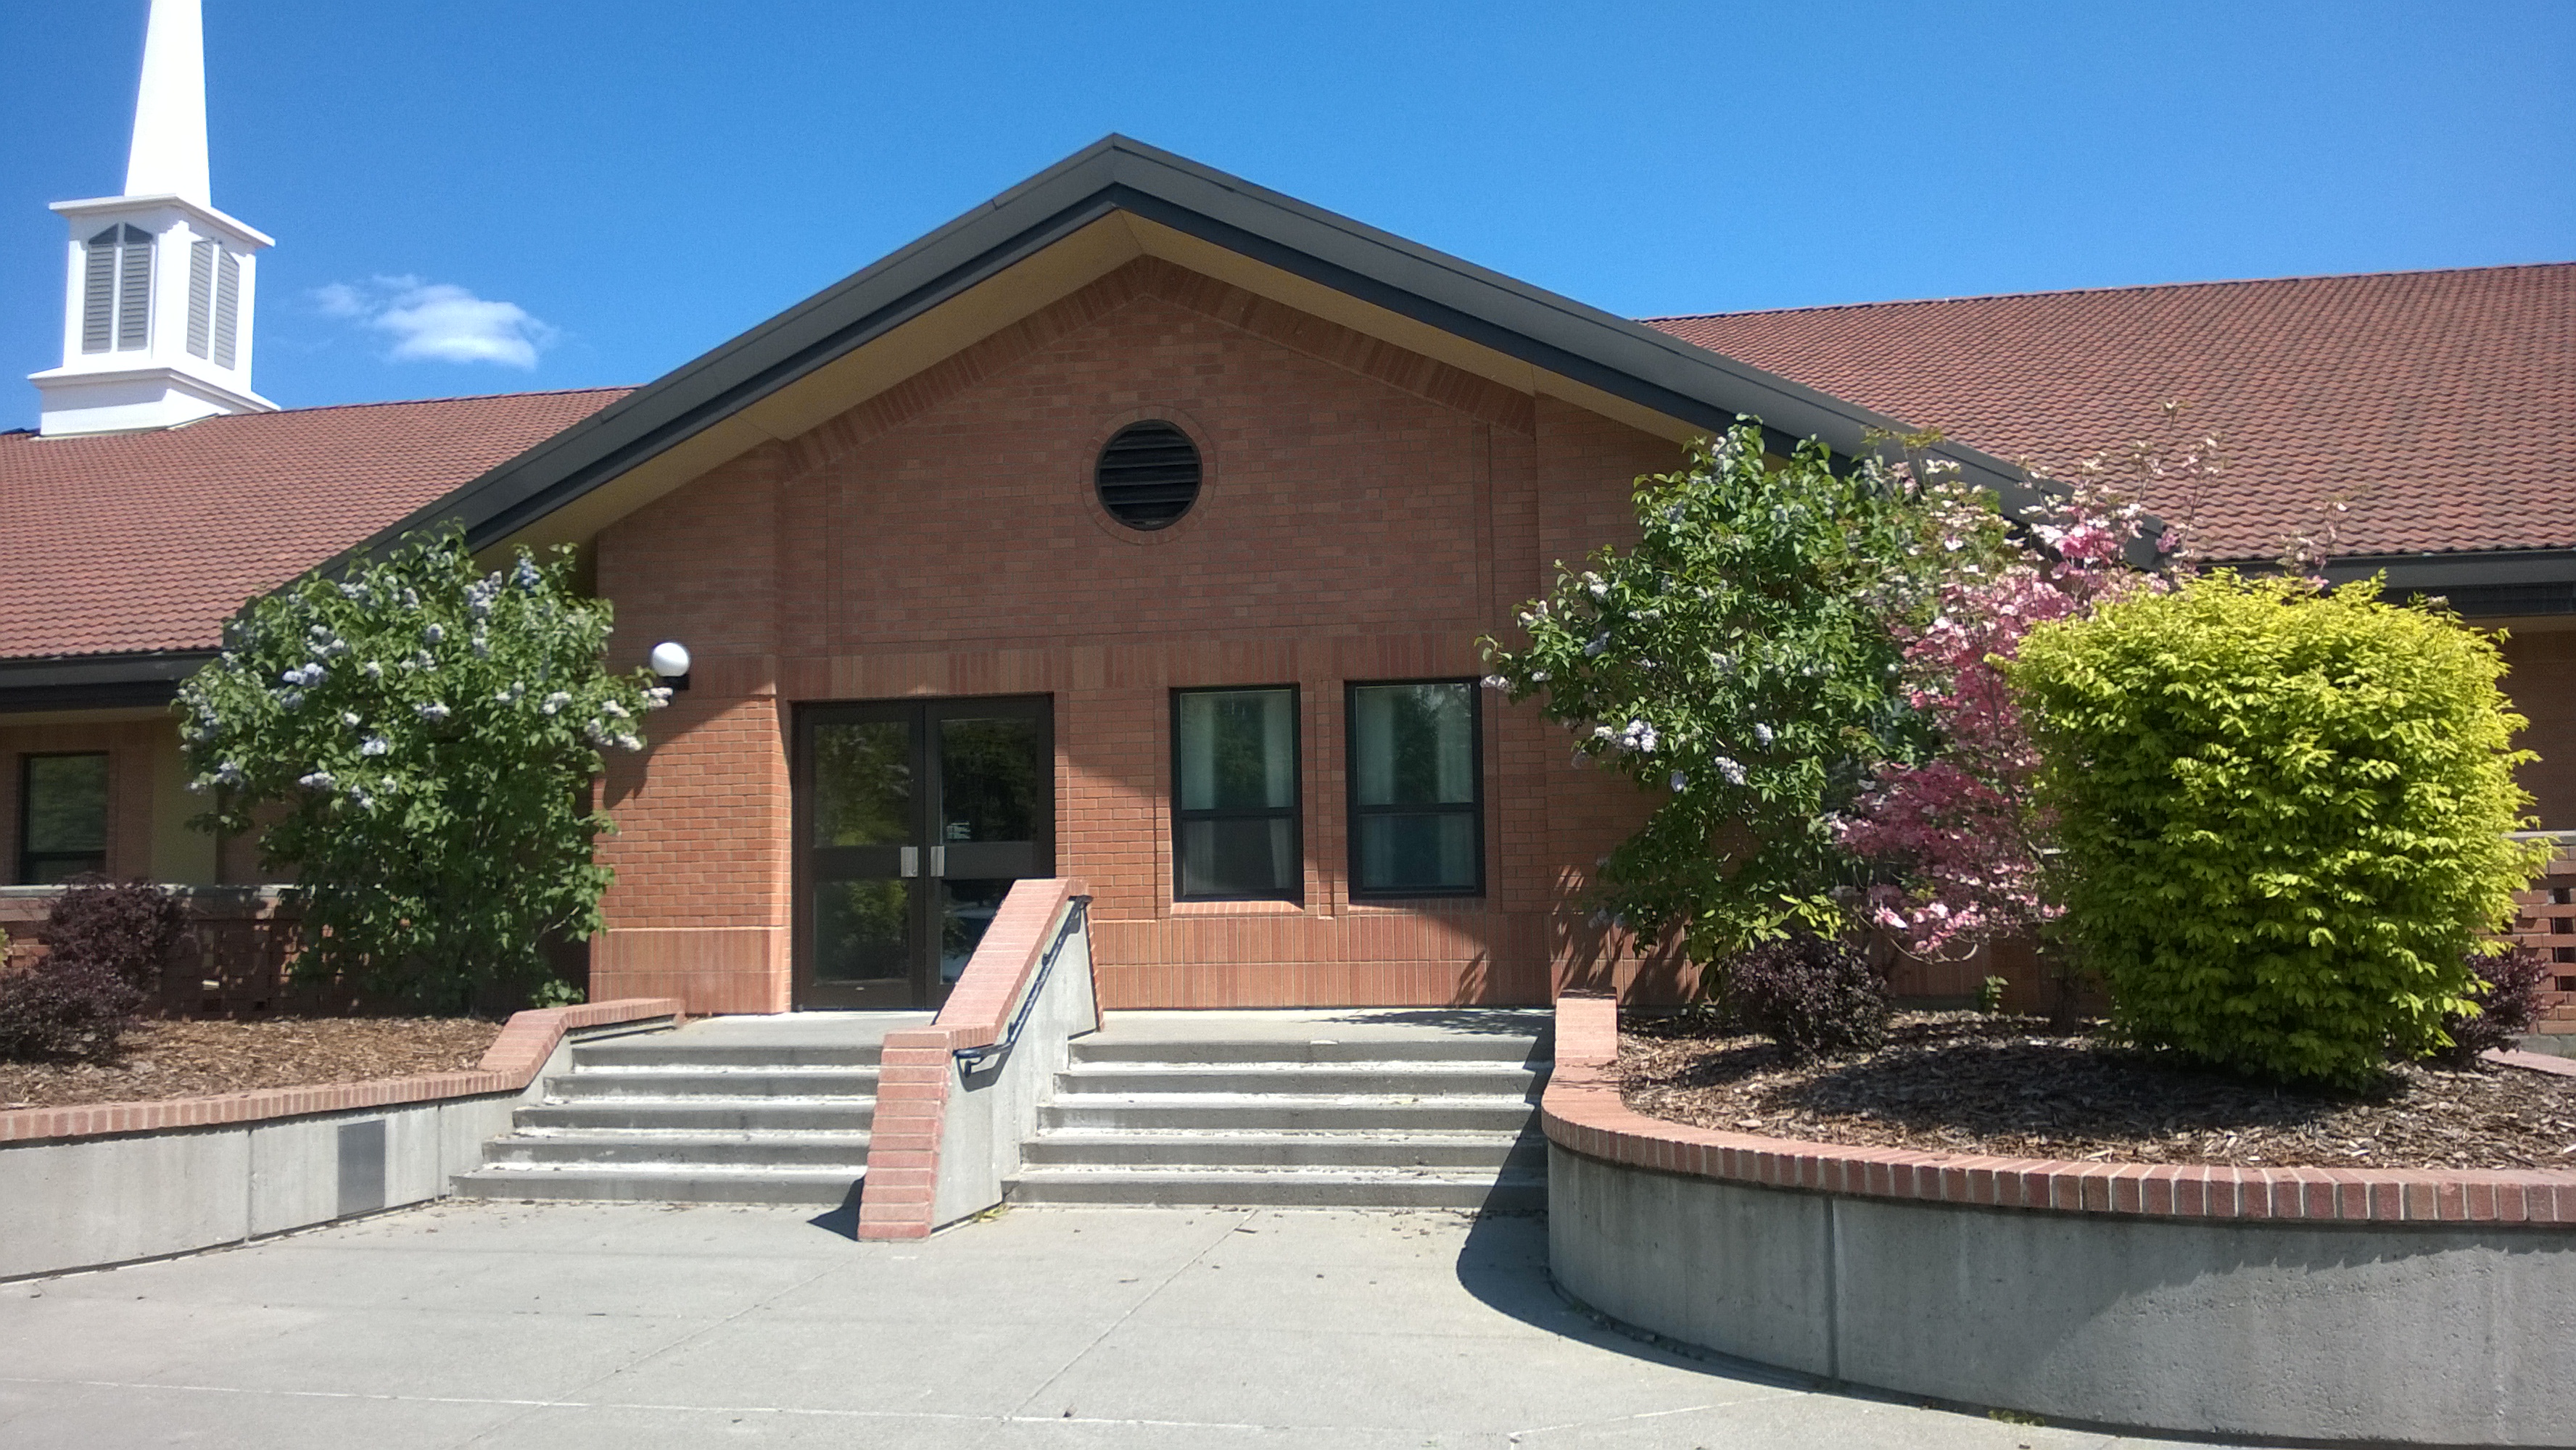 The Church of Jesus Christ of Latter-day Saints | 5001 W Shawnee Ave, Spokane, WA, 99208 | +1 (509) 467-2534